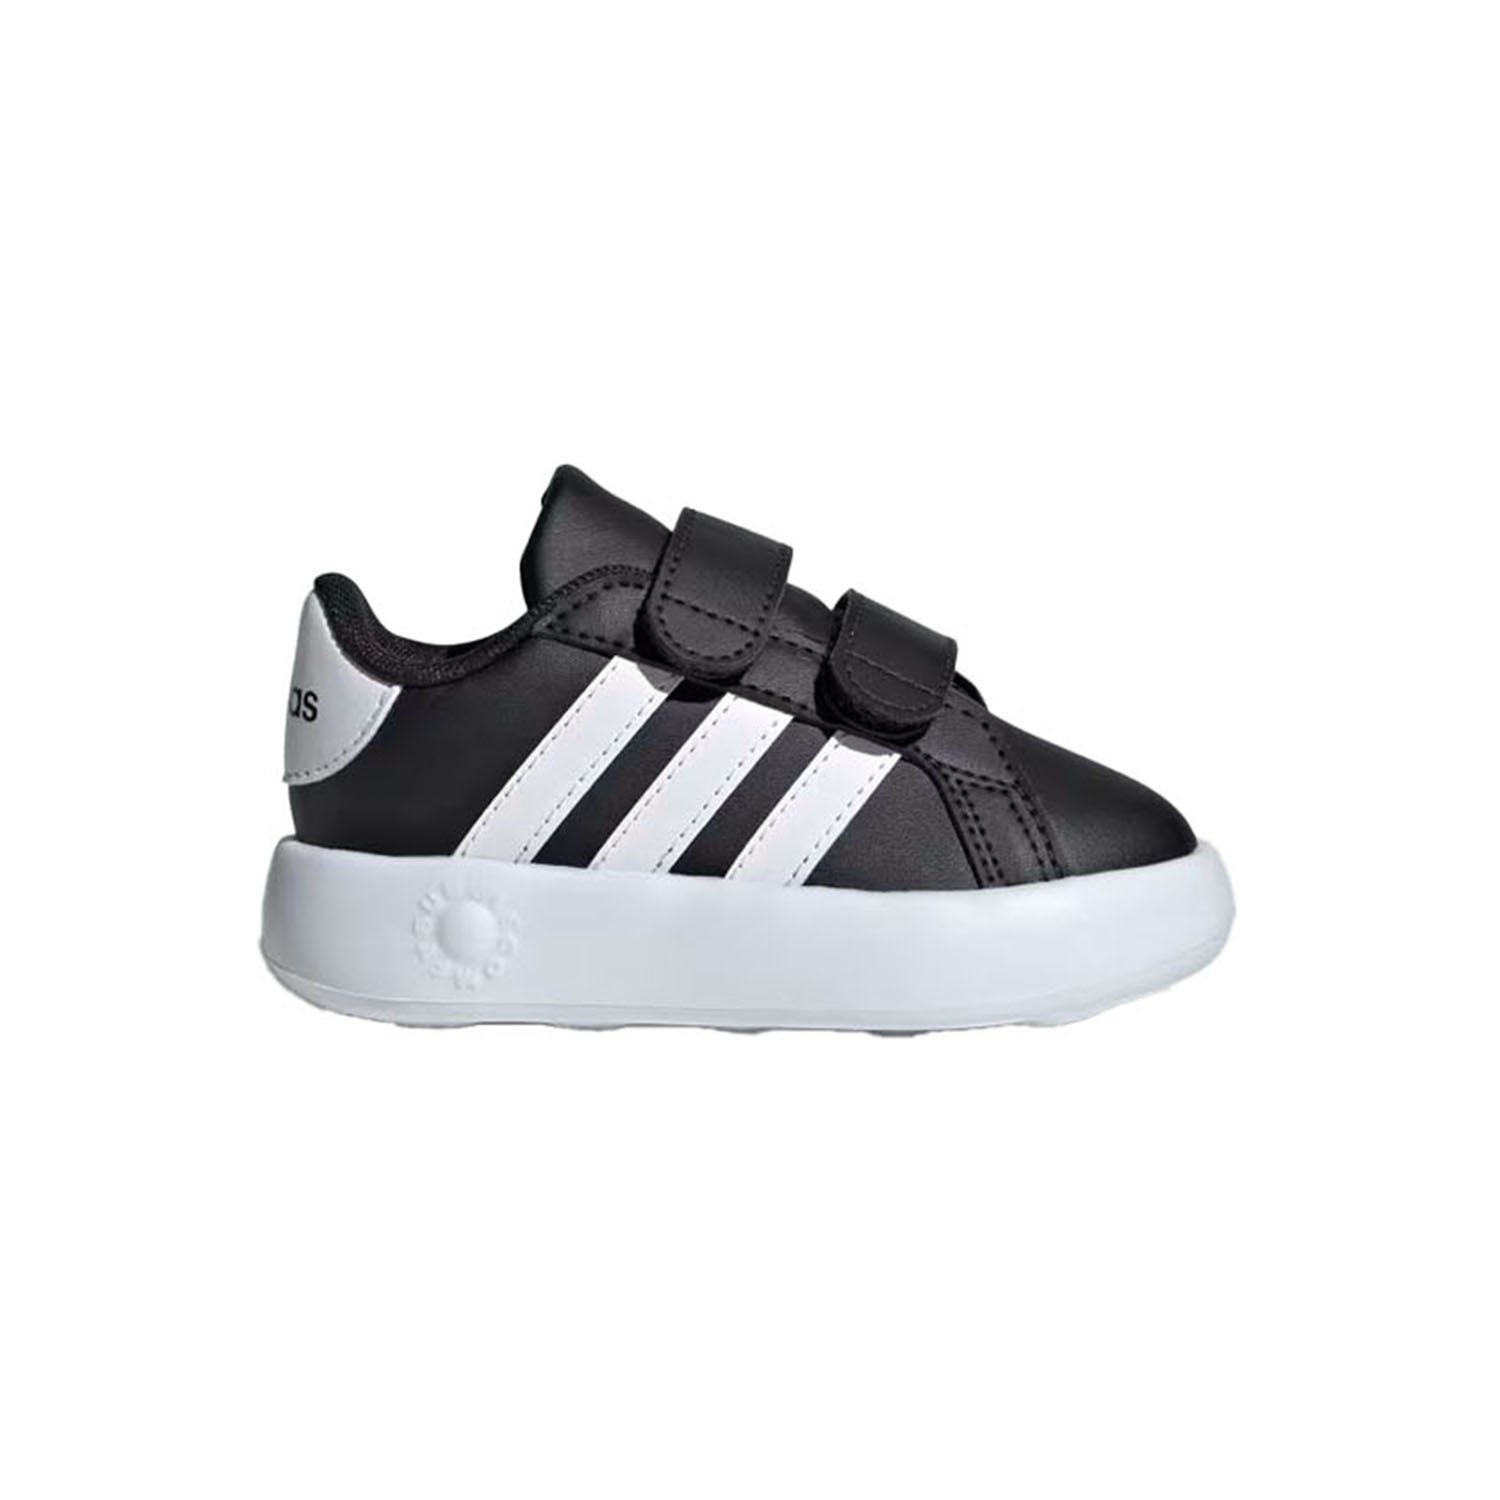 Adidas Grand Court 2.0 Çocuk Spor Ayakkabısı - Siyah - 1